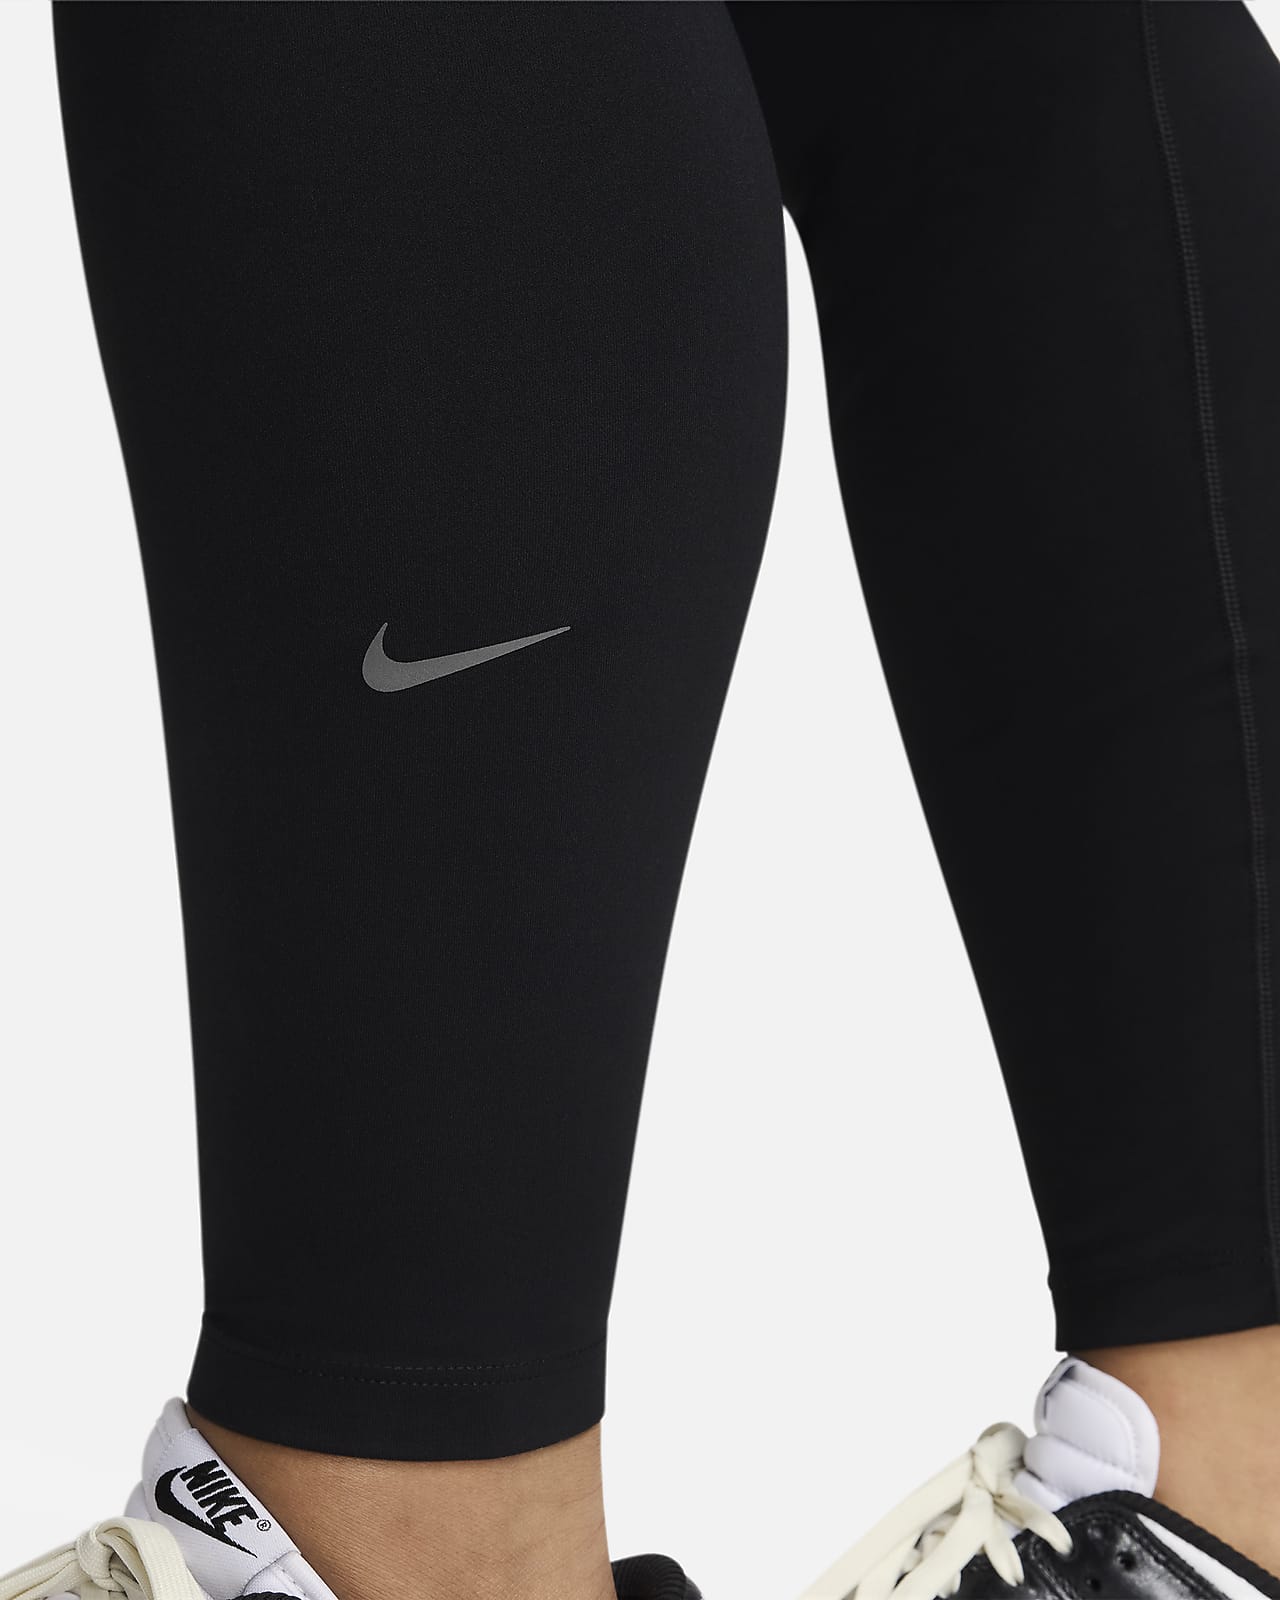 Nike Sportswear Air Women's High-Rise Leggings (Plus Size). UK